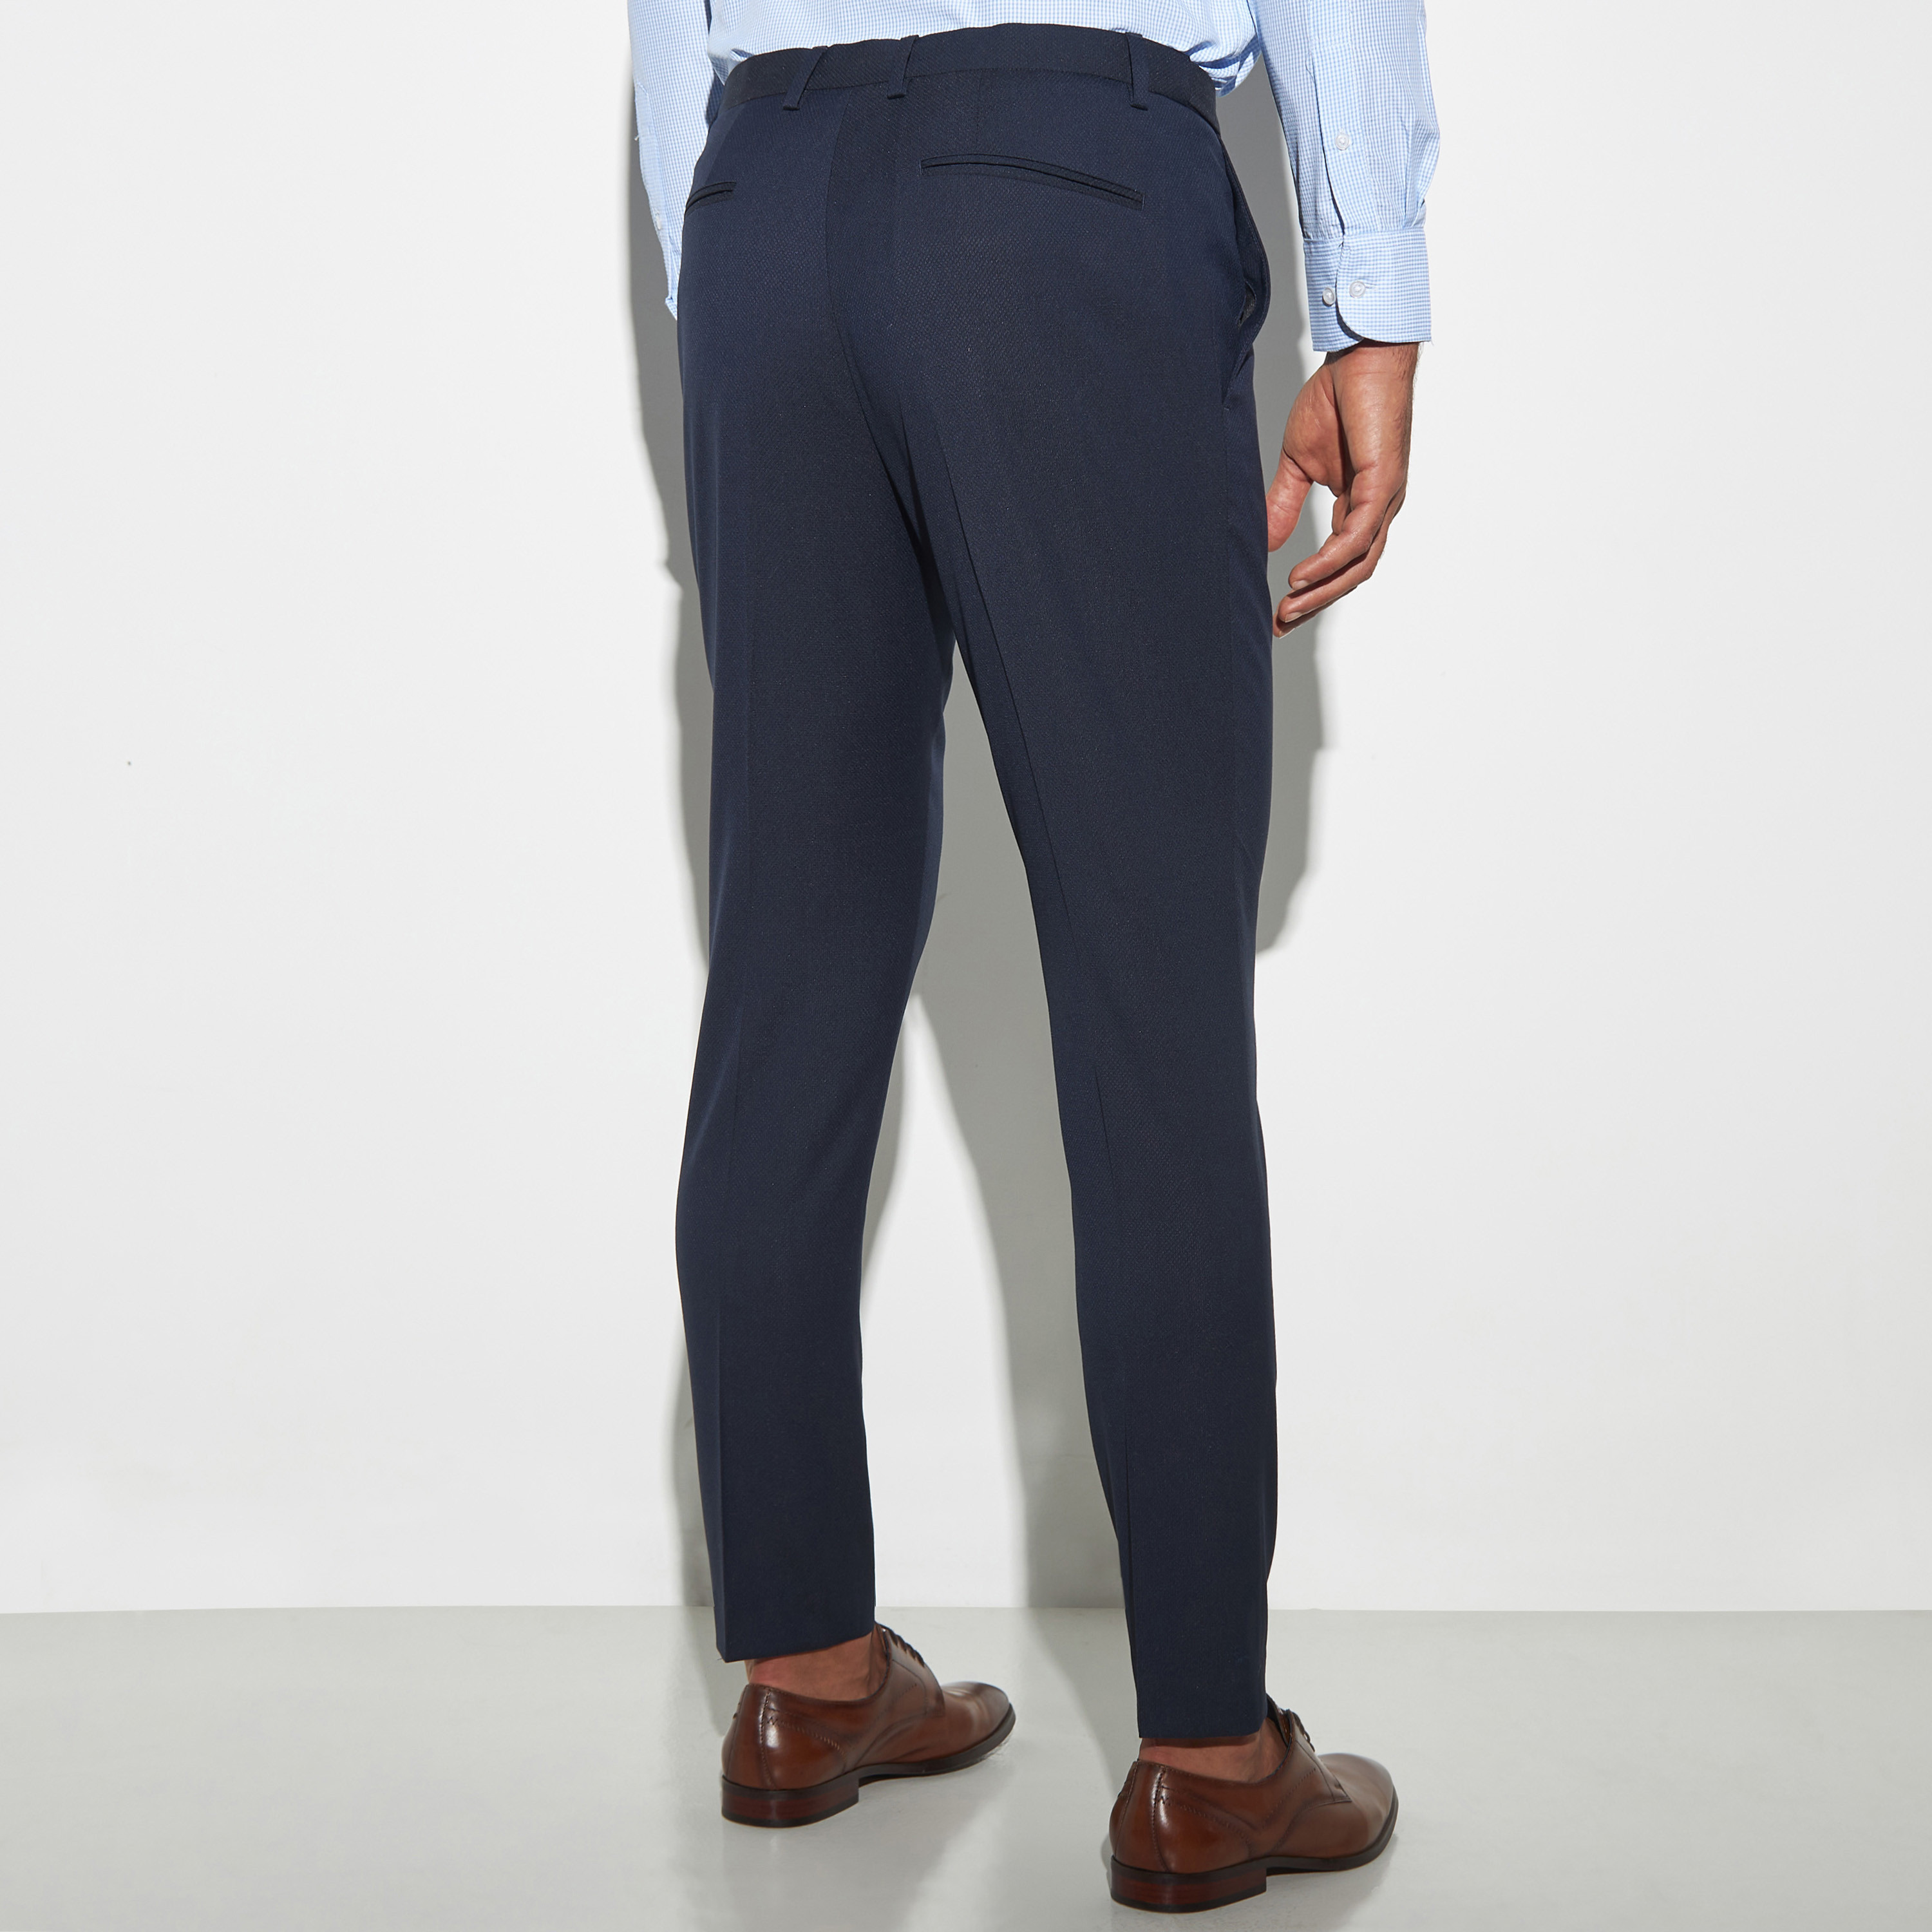 Buy VX9 Men's & Boy's Stylish Regular Fit Formal Trouser, Office Pants  (Gray) (32) at Amazon.in